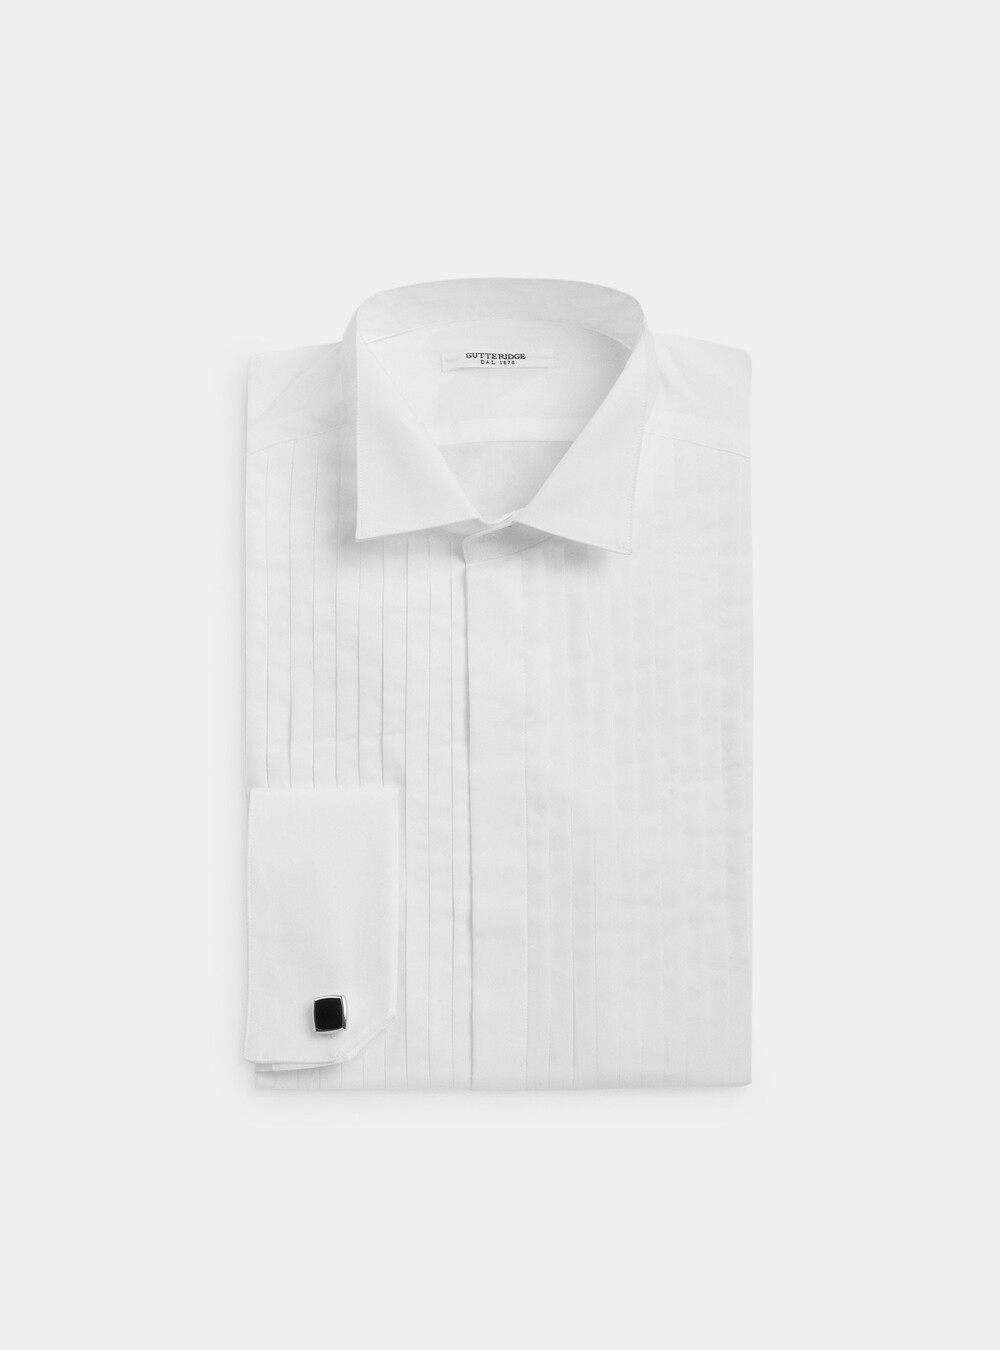 Diplomatic collar tuxedo shirt with twin cuff | GutteridgeUS | Shirts Uomo